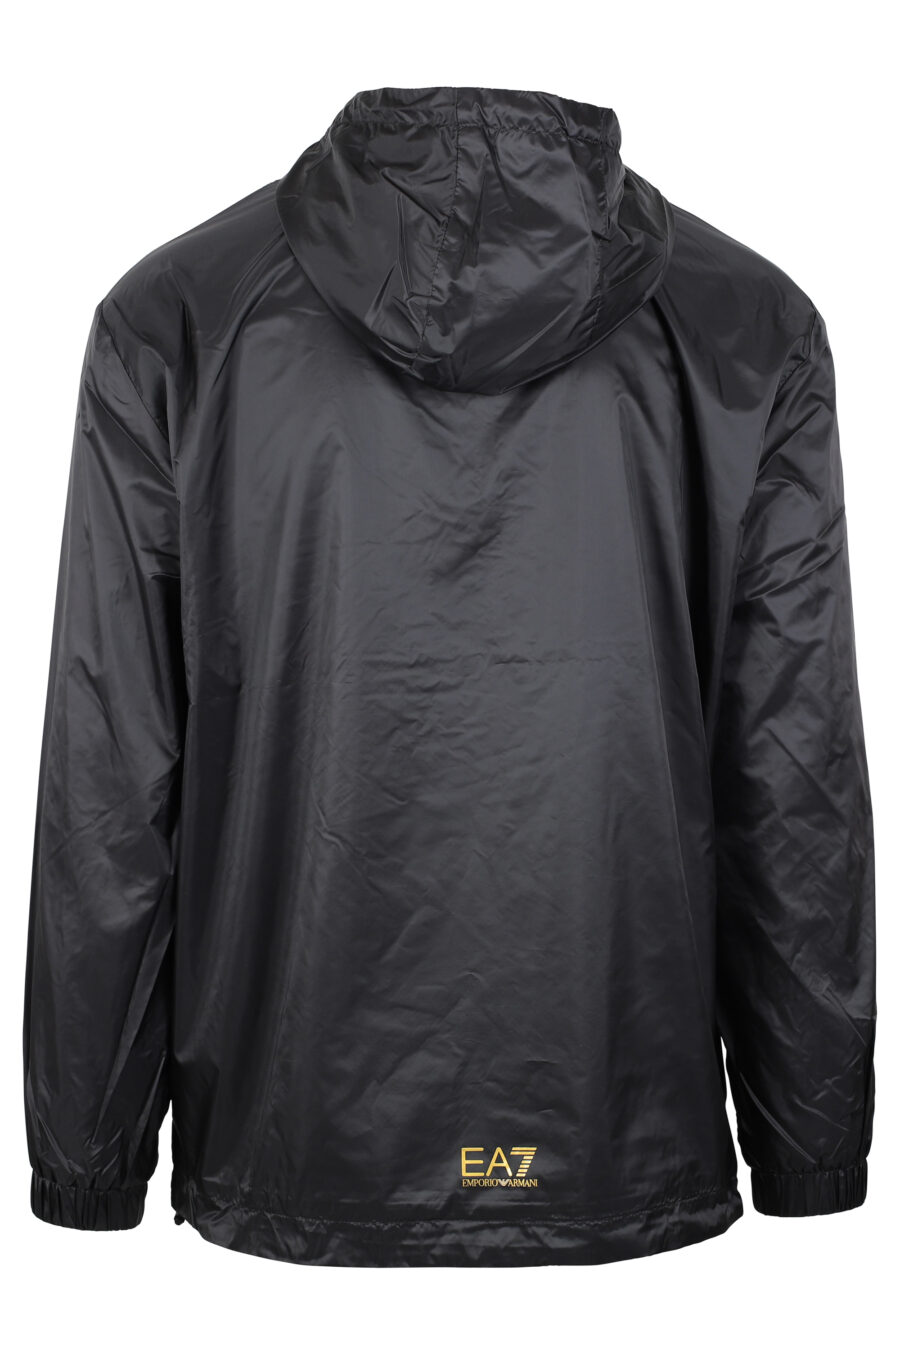 Chaqueta negra impermeable con capucha y logo mix vertical - IMG 4662